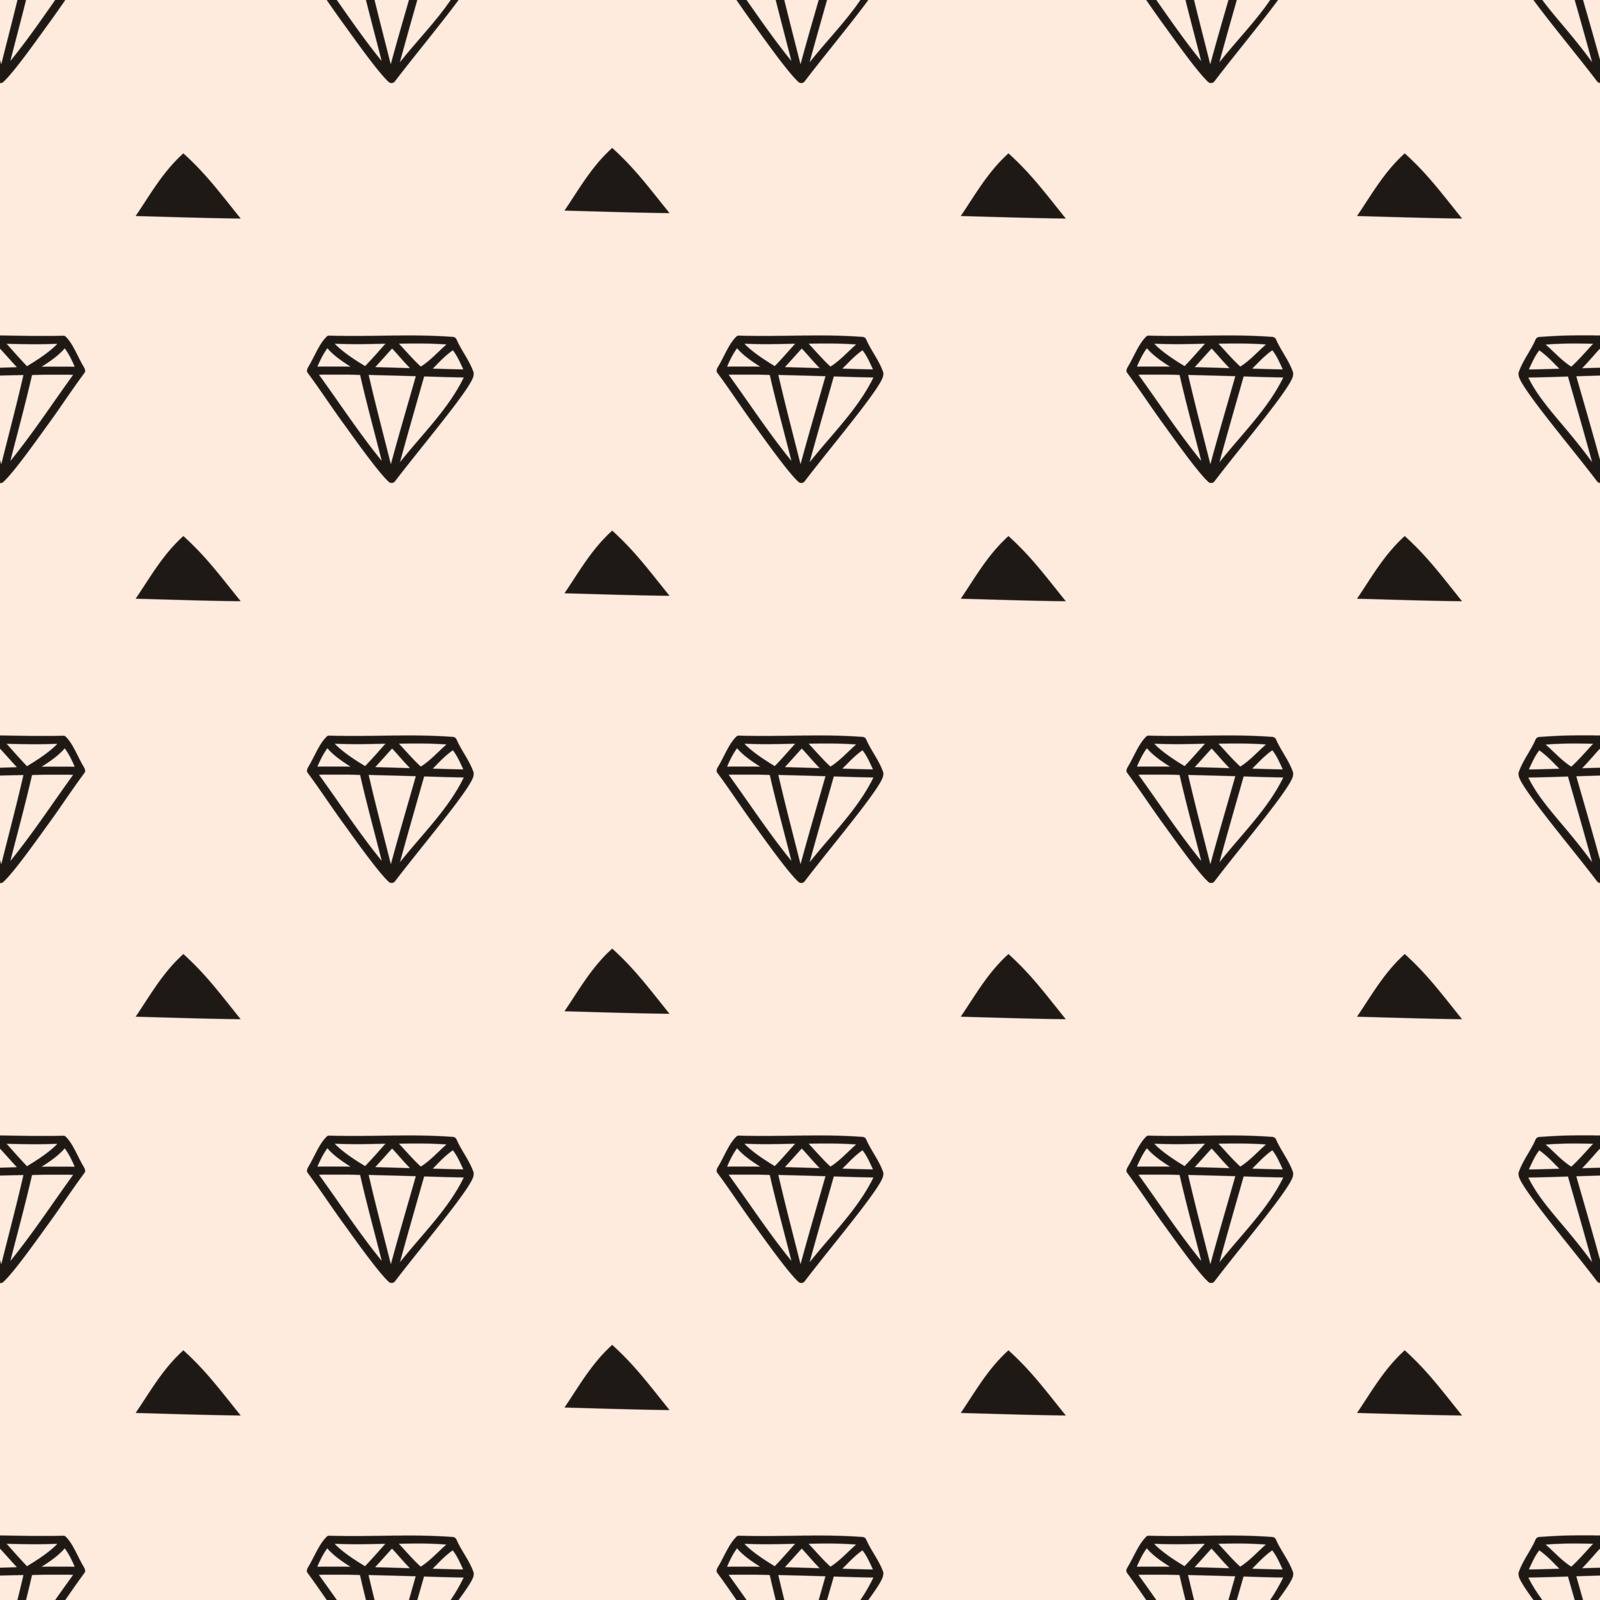 Diamonds and Triangles Seamless Pattern by ivaleksa